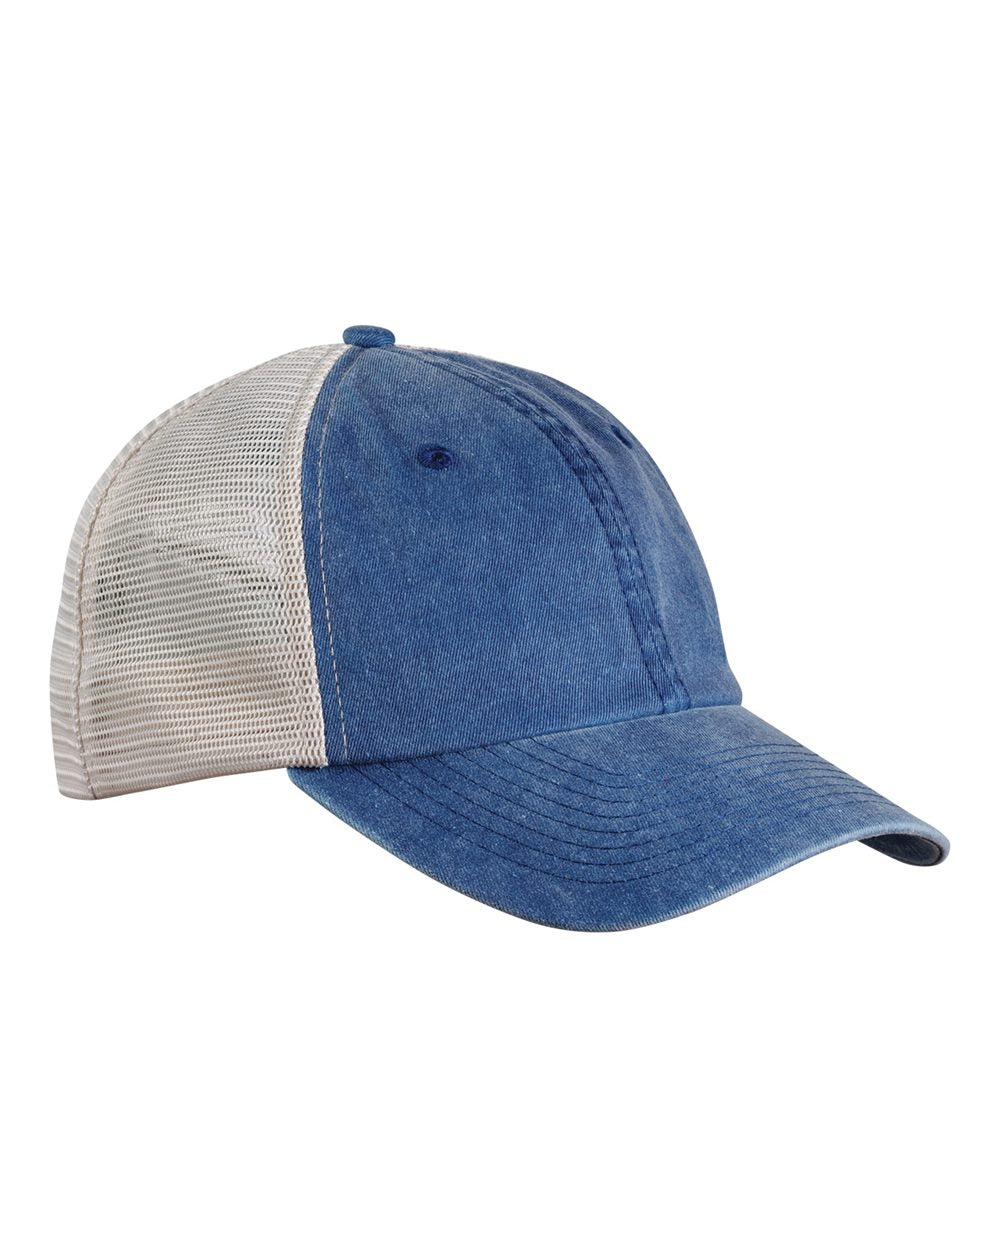 Pigment Dyed Trucker Mesh Back Hat - Mesh Hats Caps -Sport-Smart.com